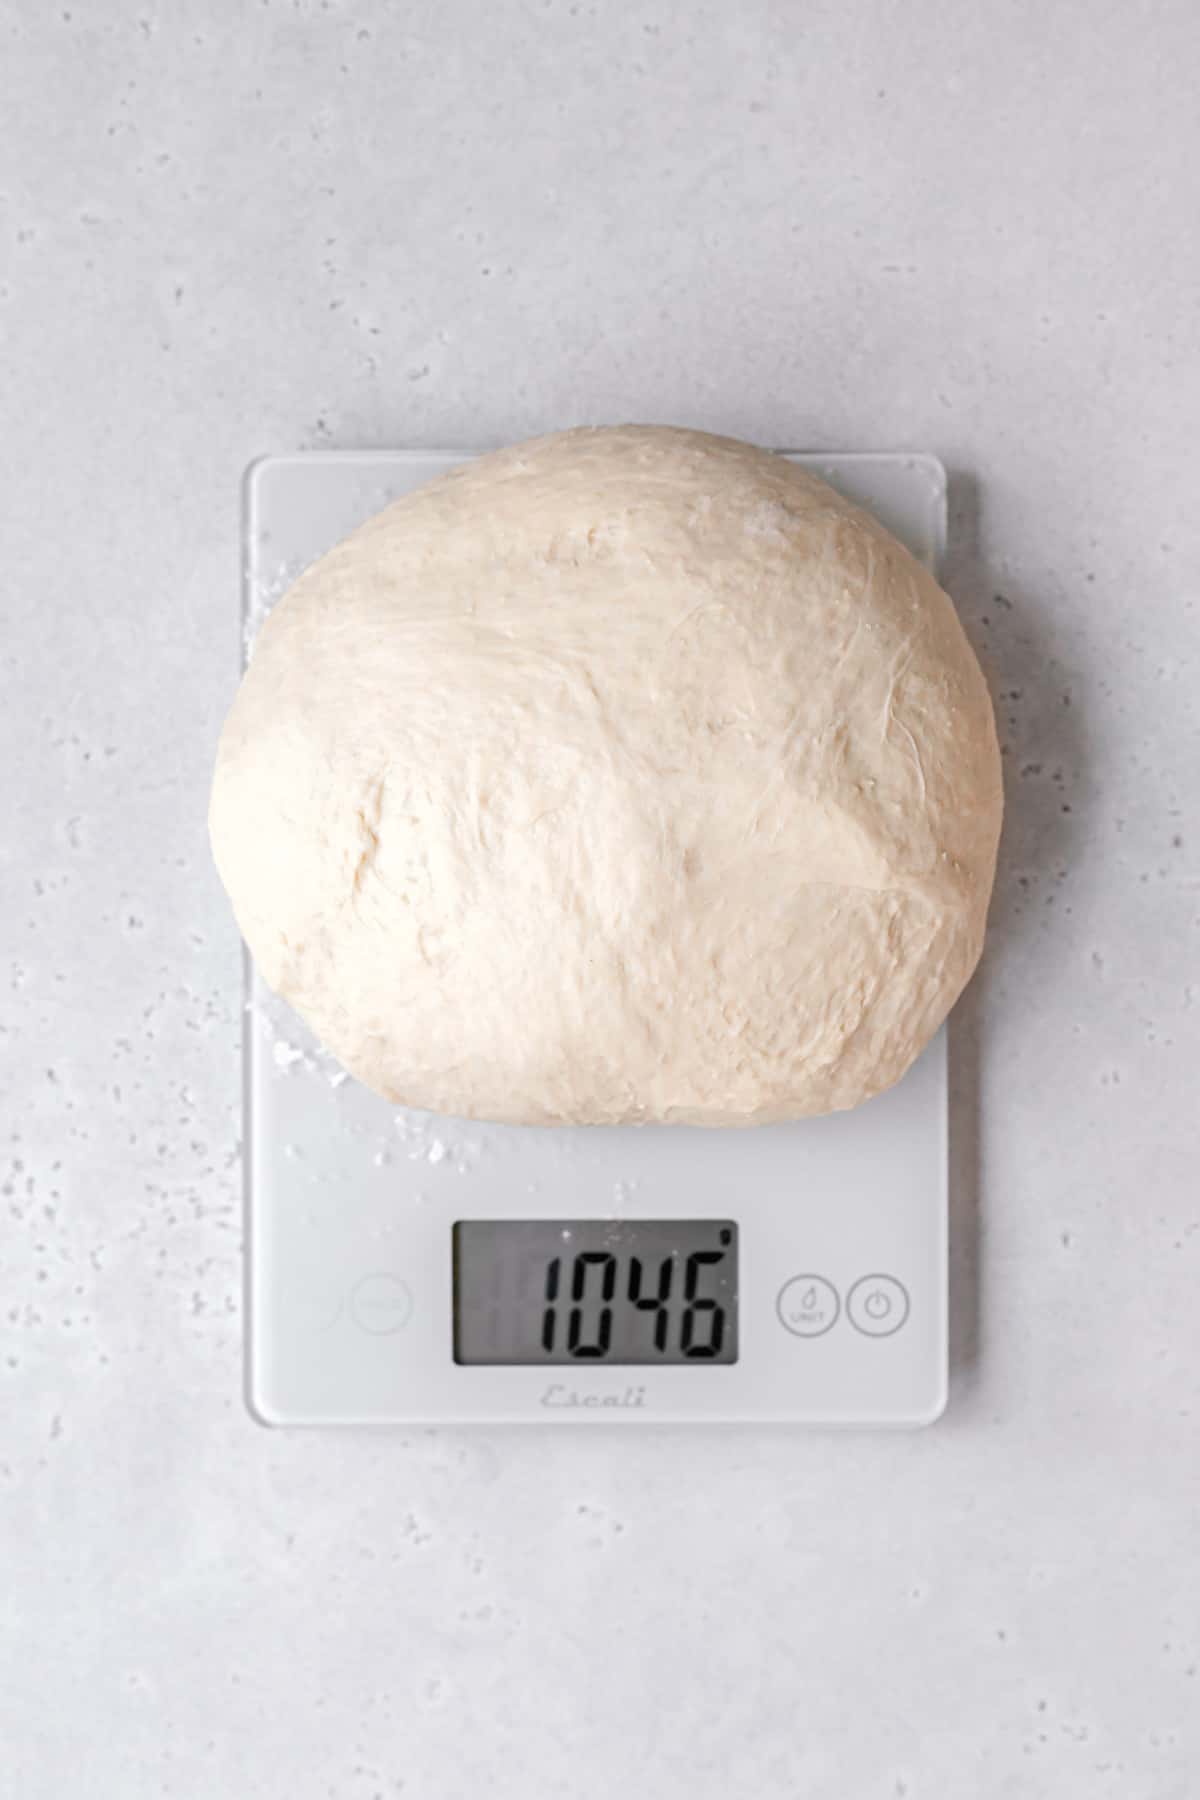 dough on scale.